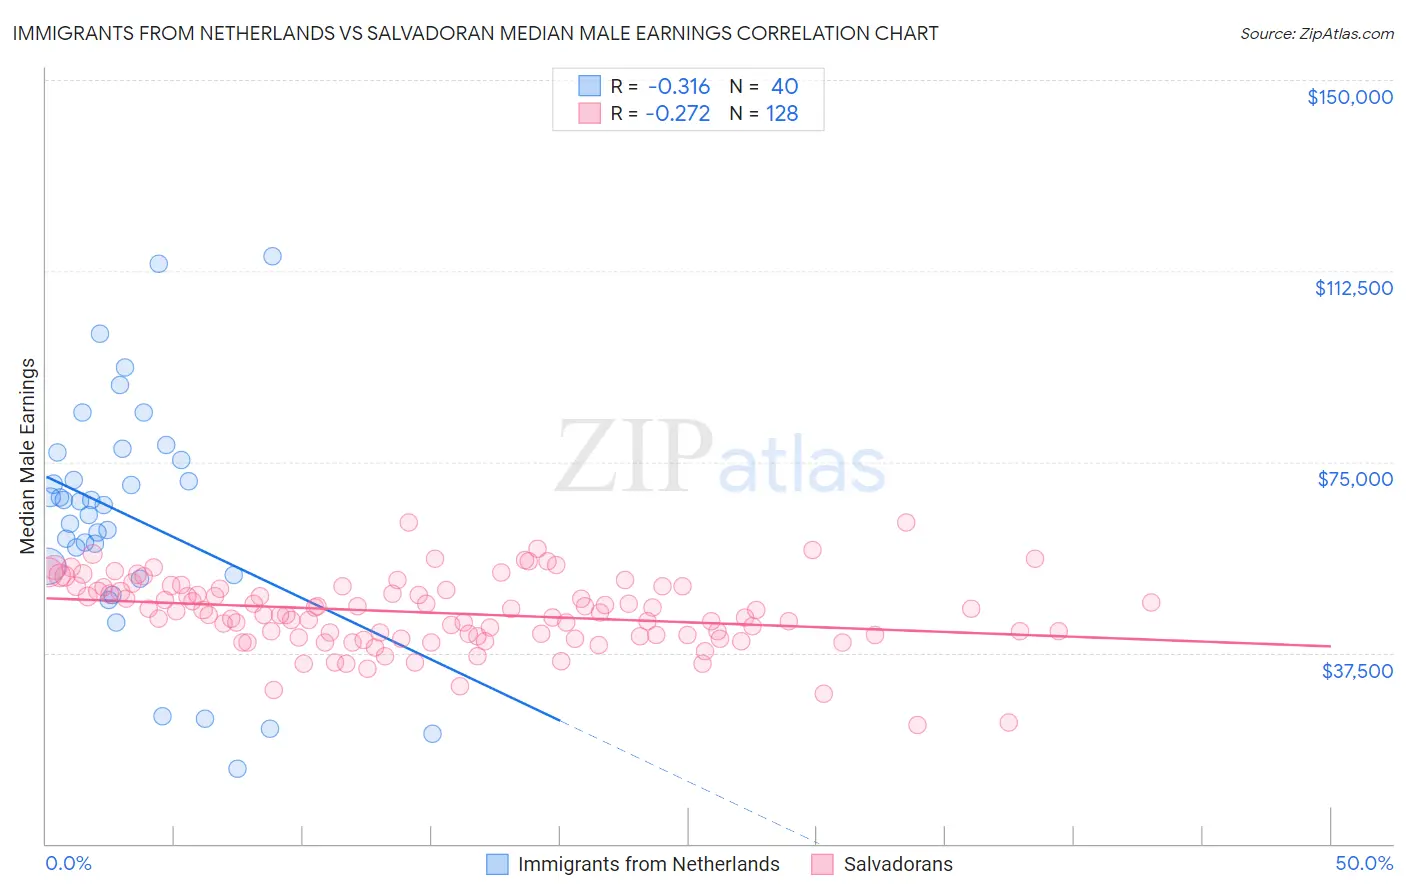 Immigrants from Netherlands vs Salvadoran Median Male Earnings